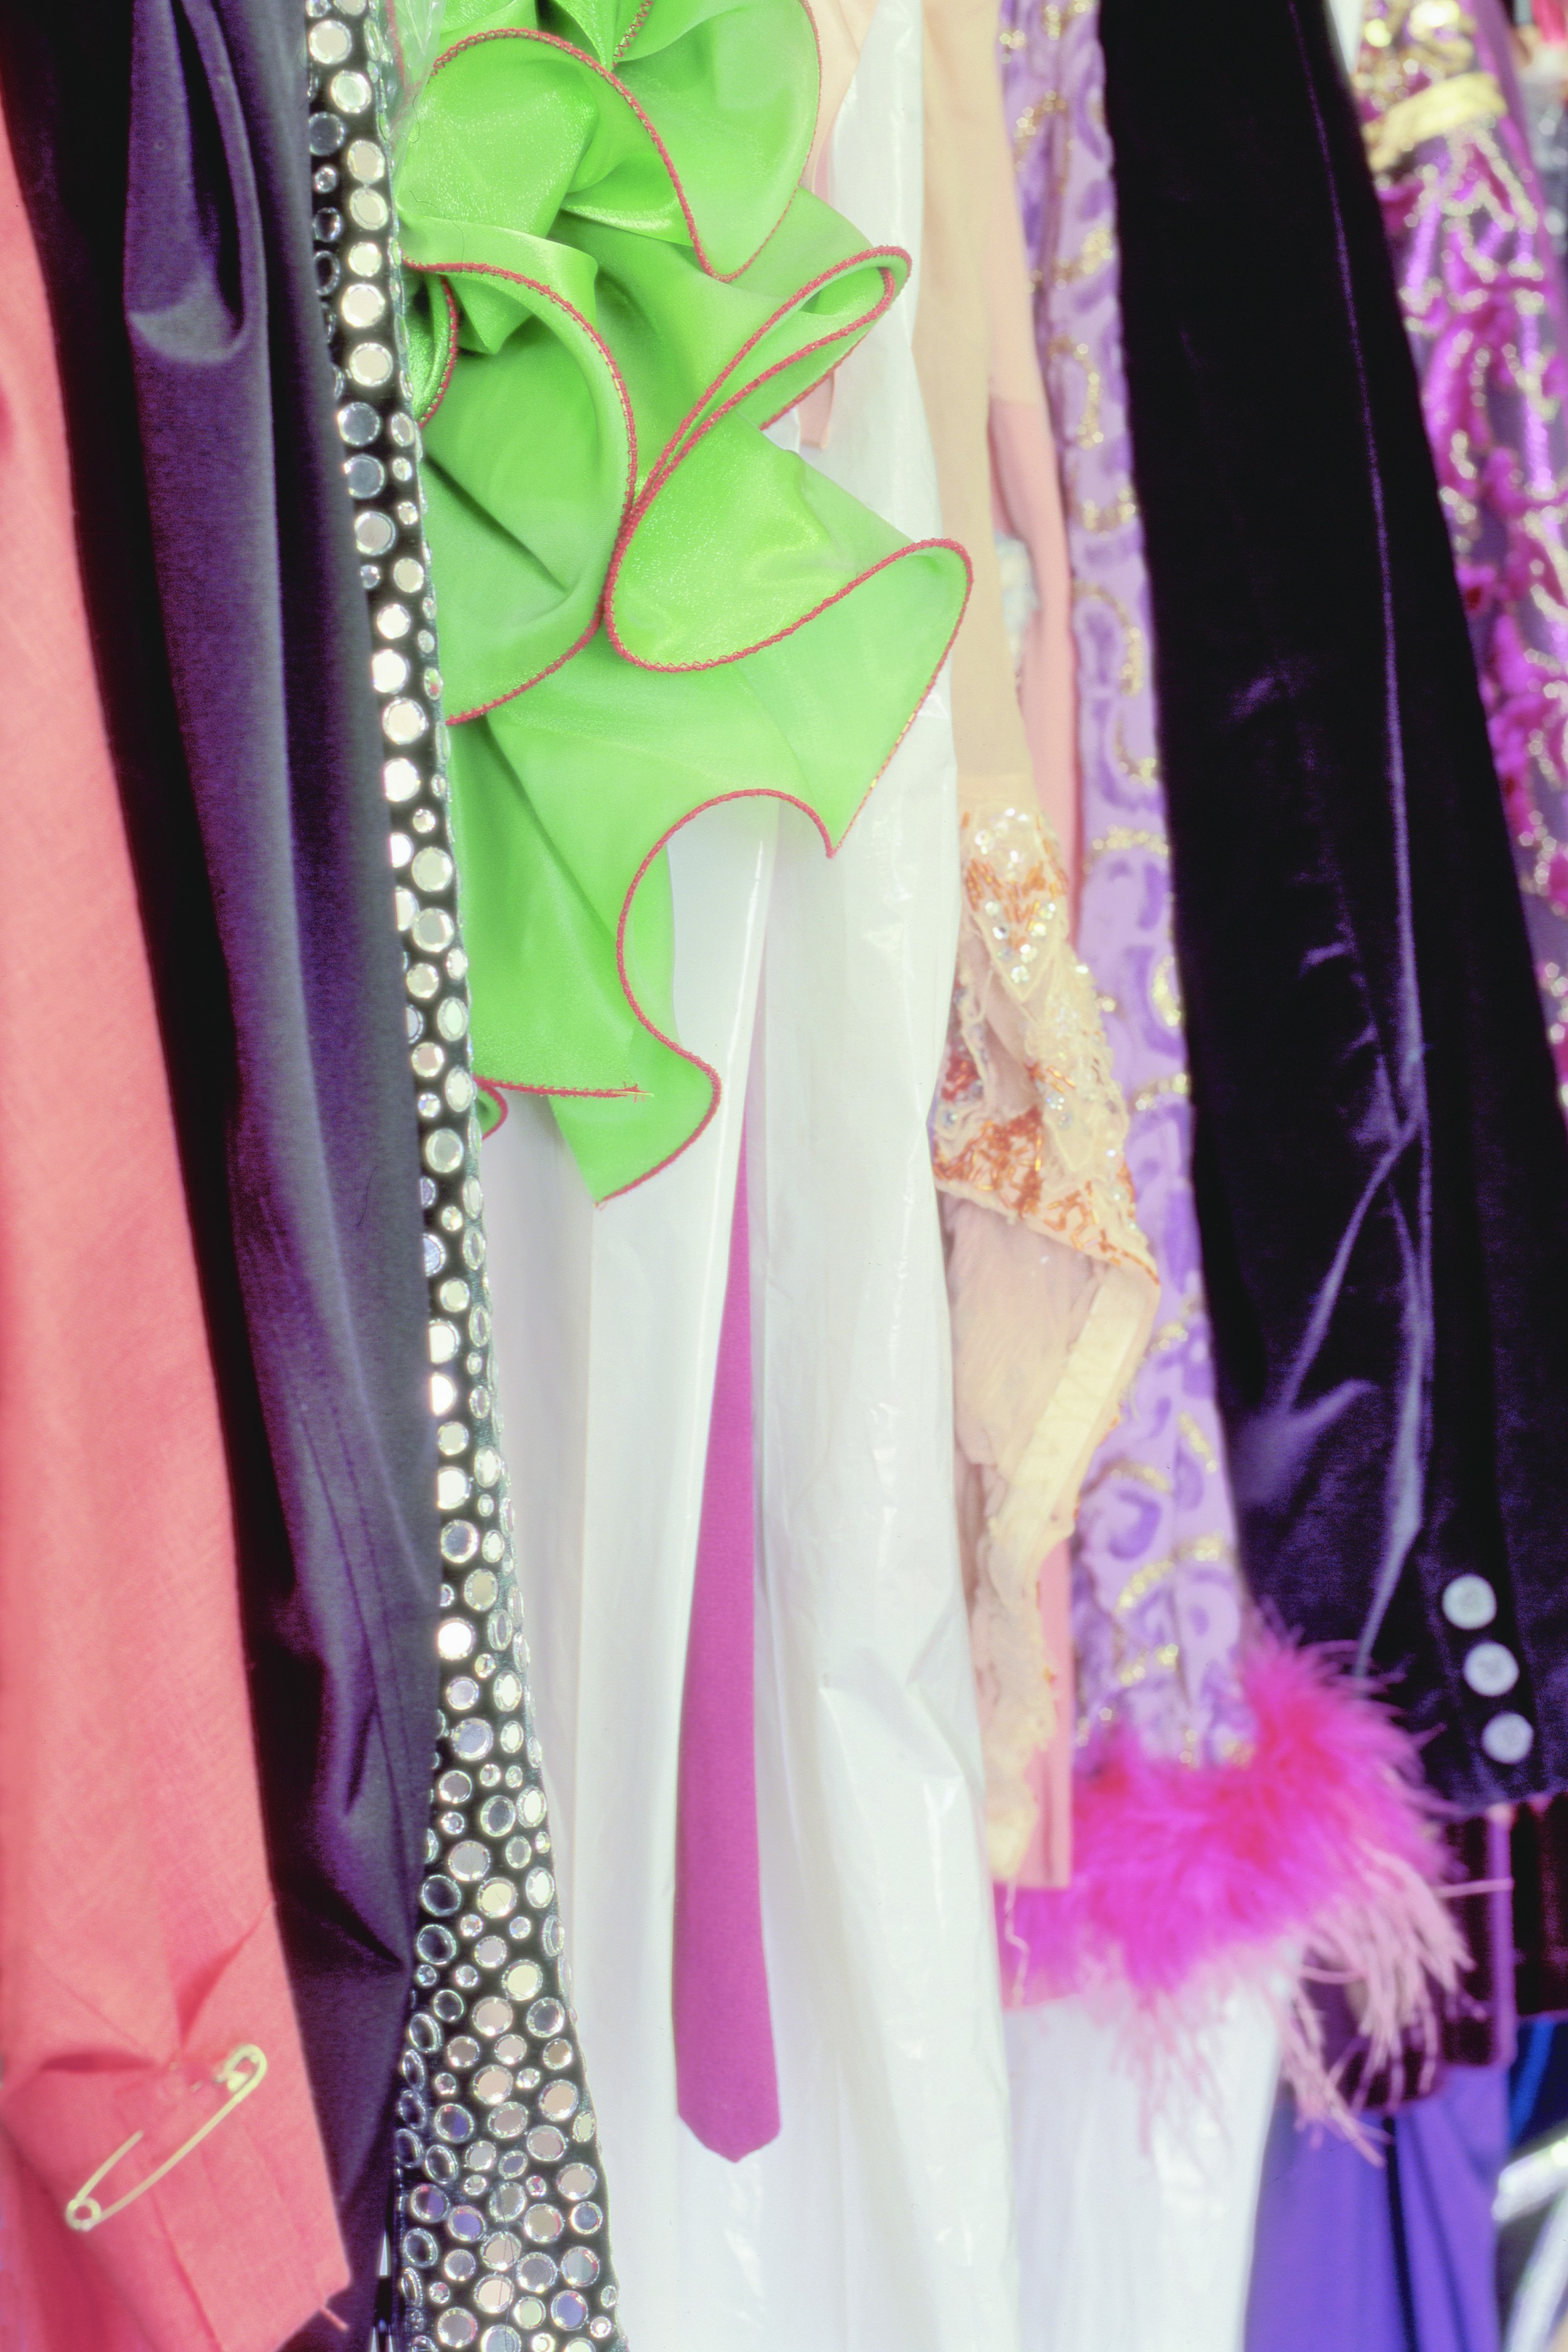   Showgirl Costumes,   2014   